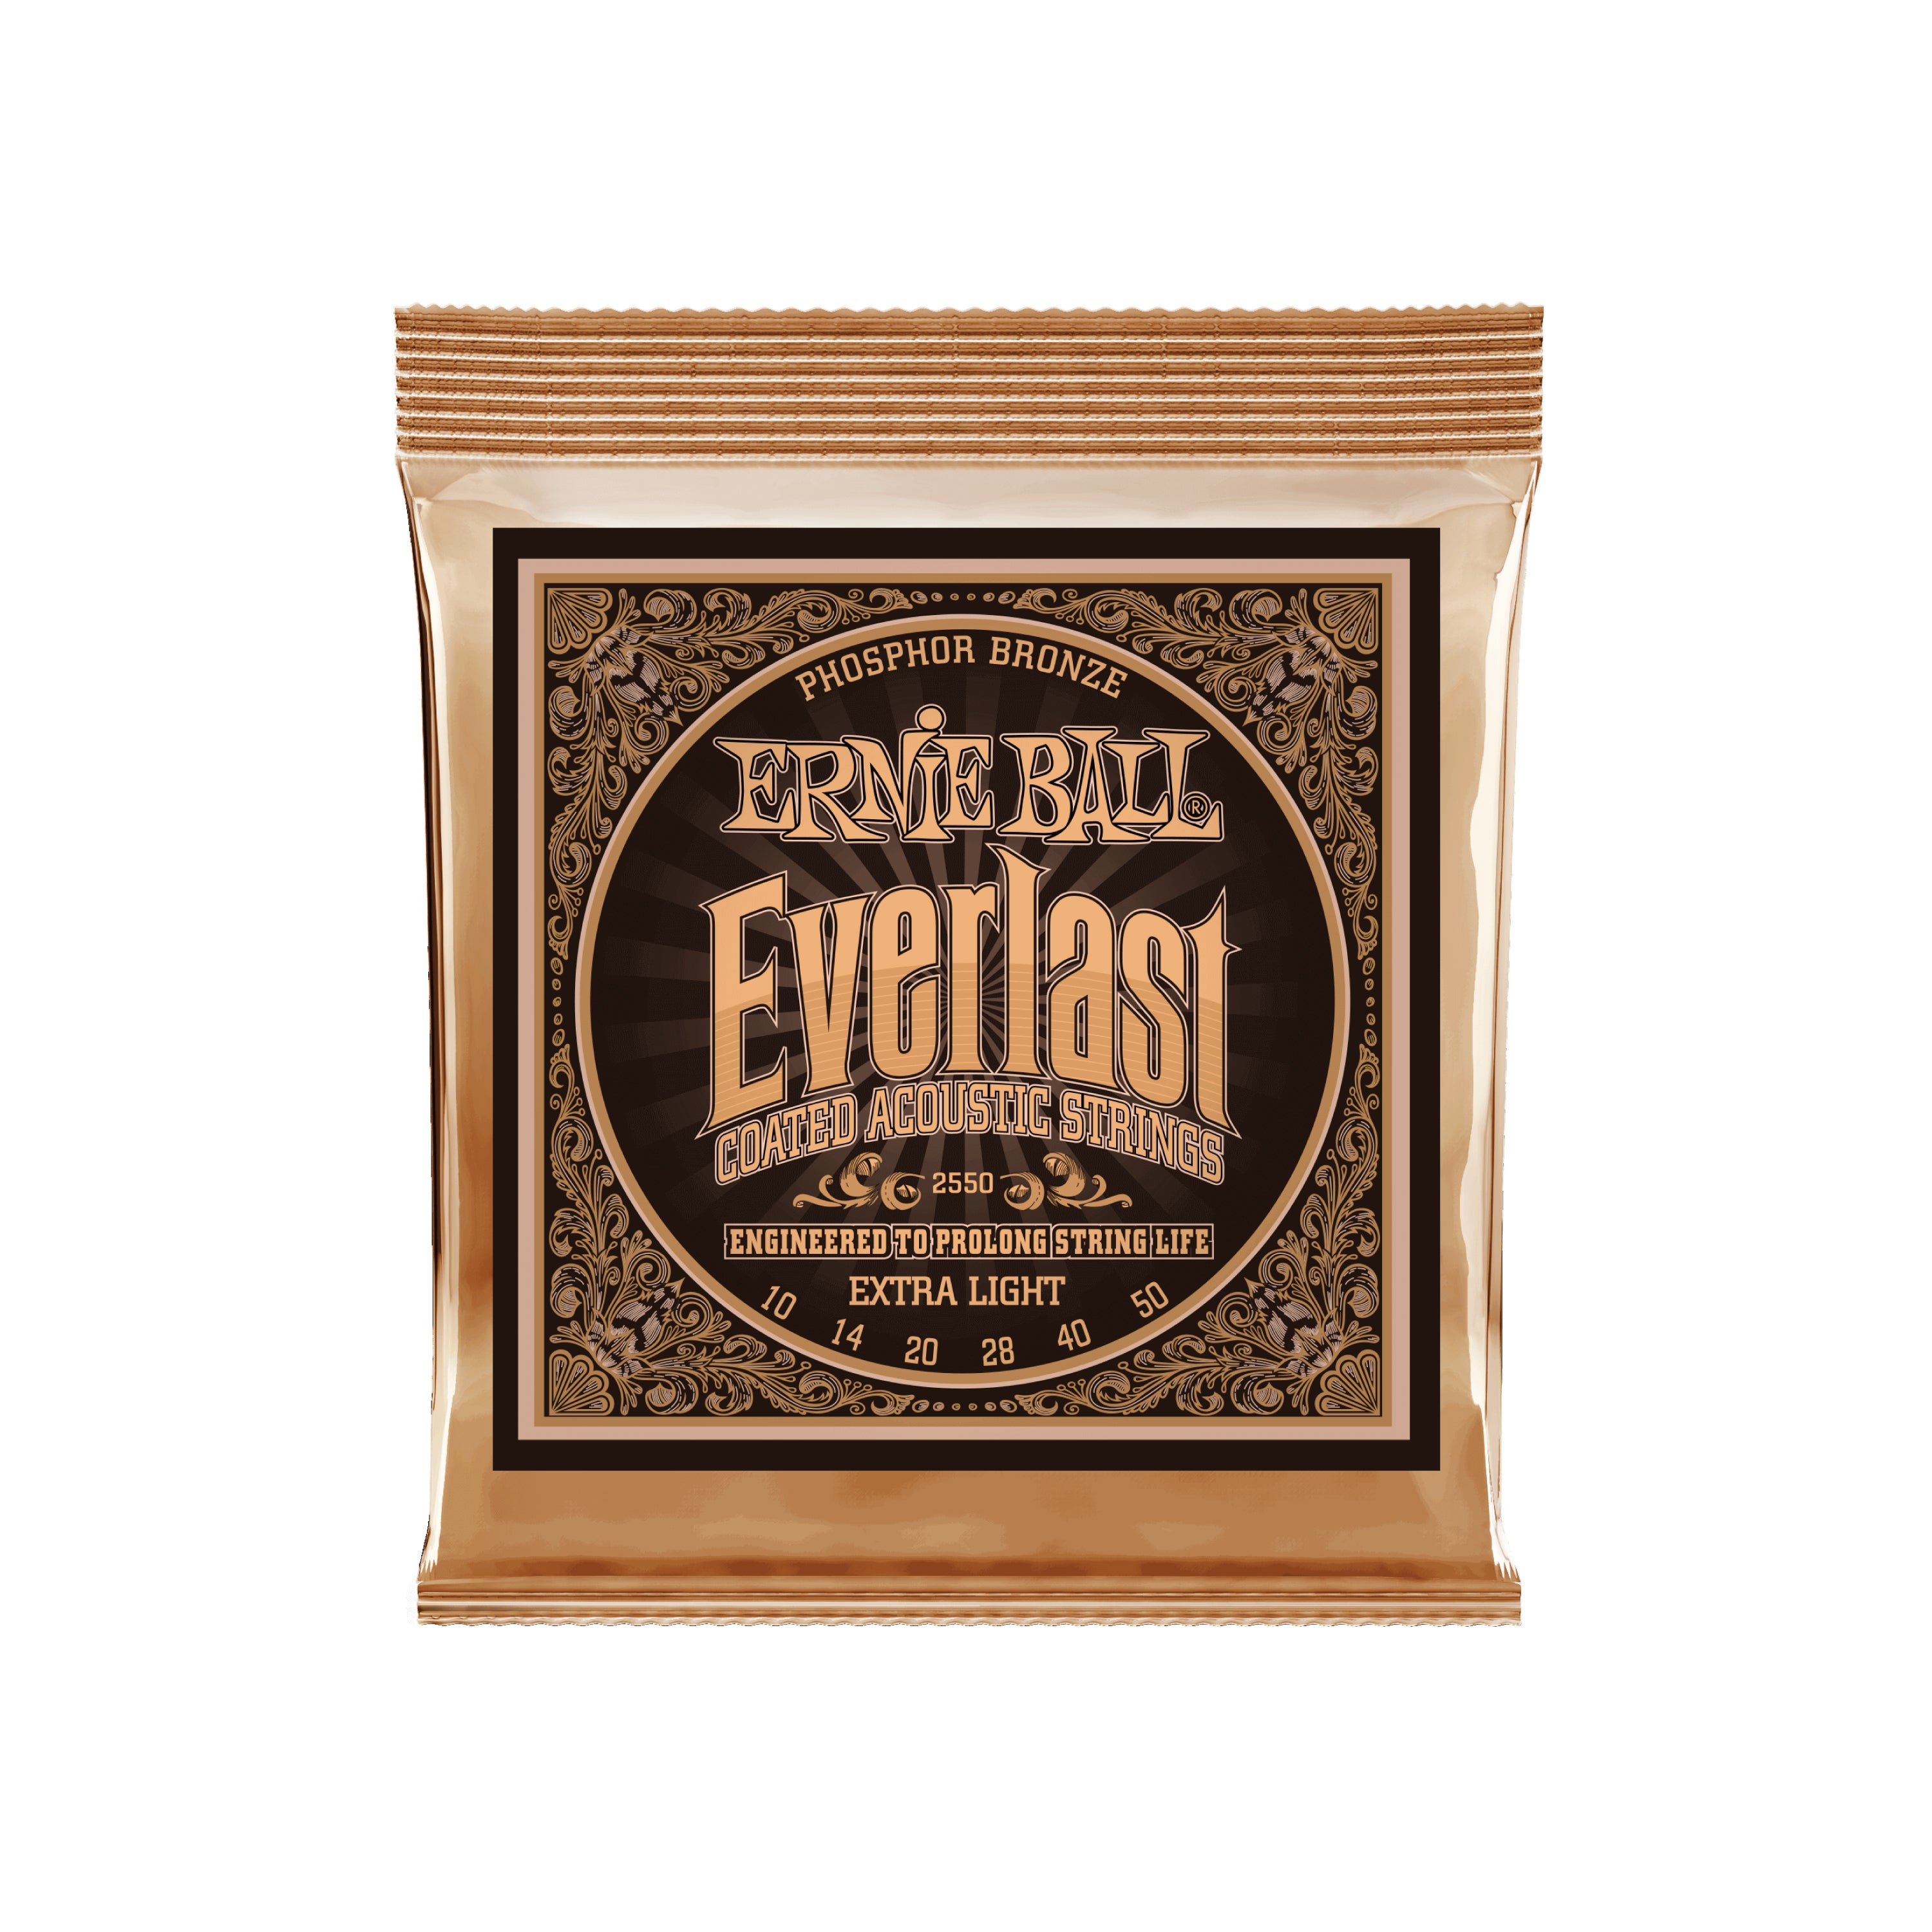 Ernie Ball, 2550, Everlast Acoustic Phosphor Bronze Extra Light, 結他弦線